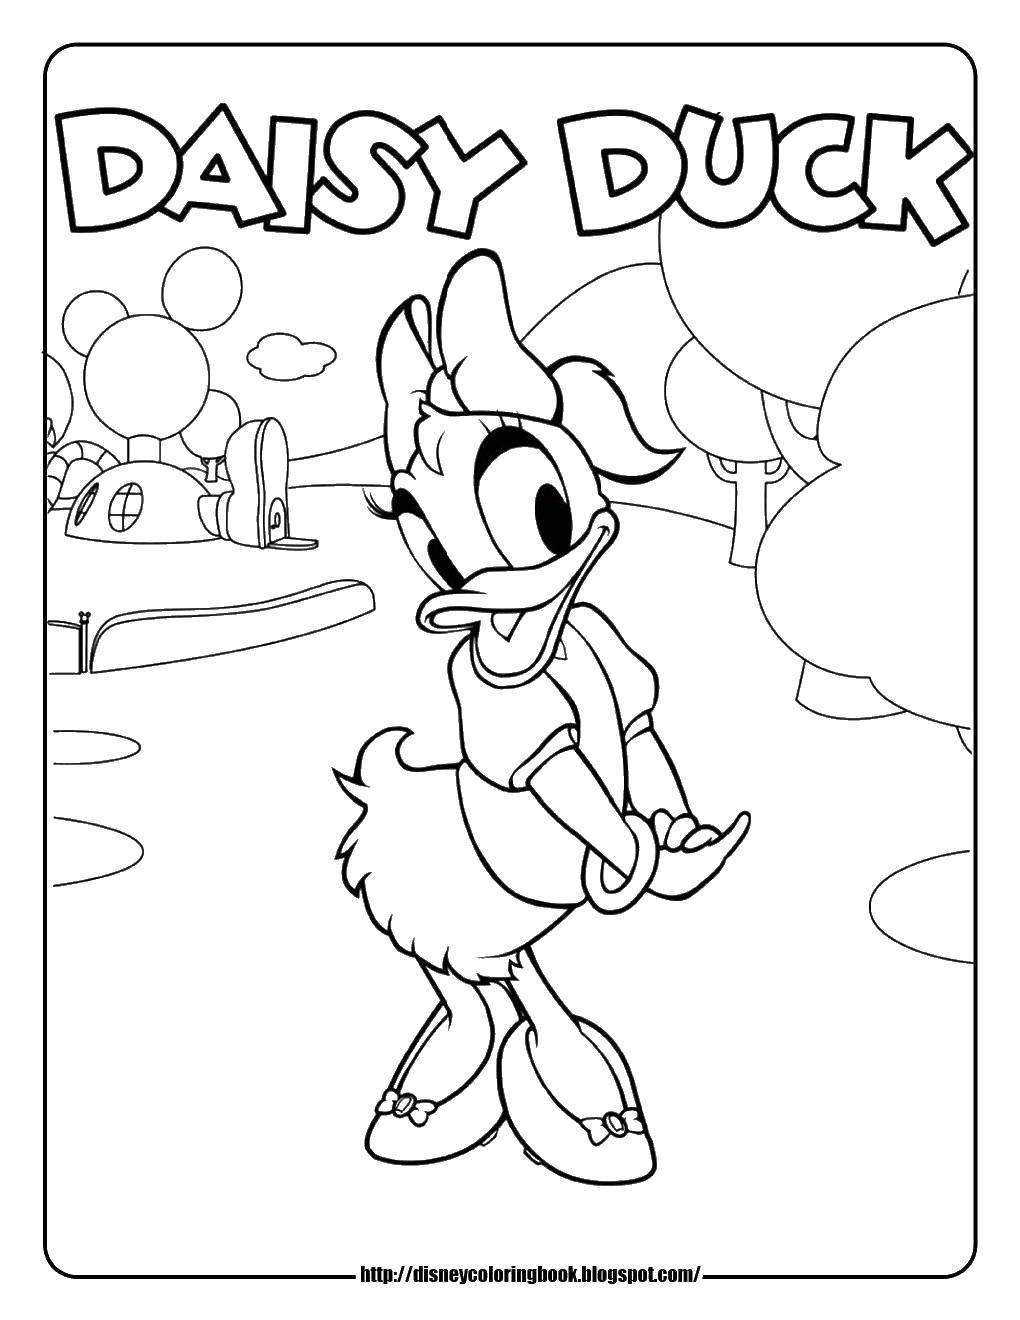 Coloring Daisy duck. Category Disney cartoons. Tags:  Disney cartoons, Daisy Duck.